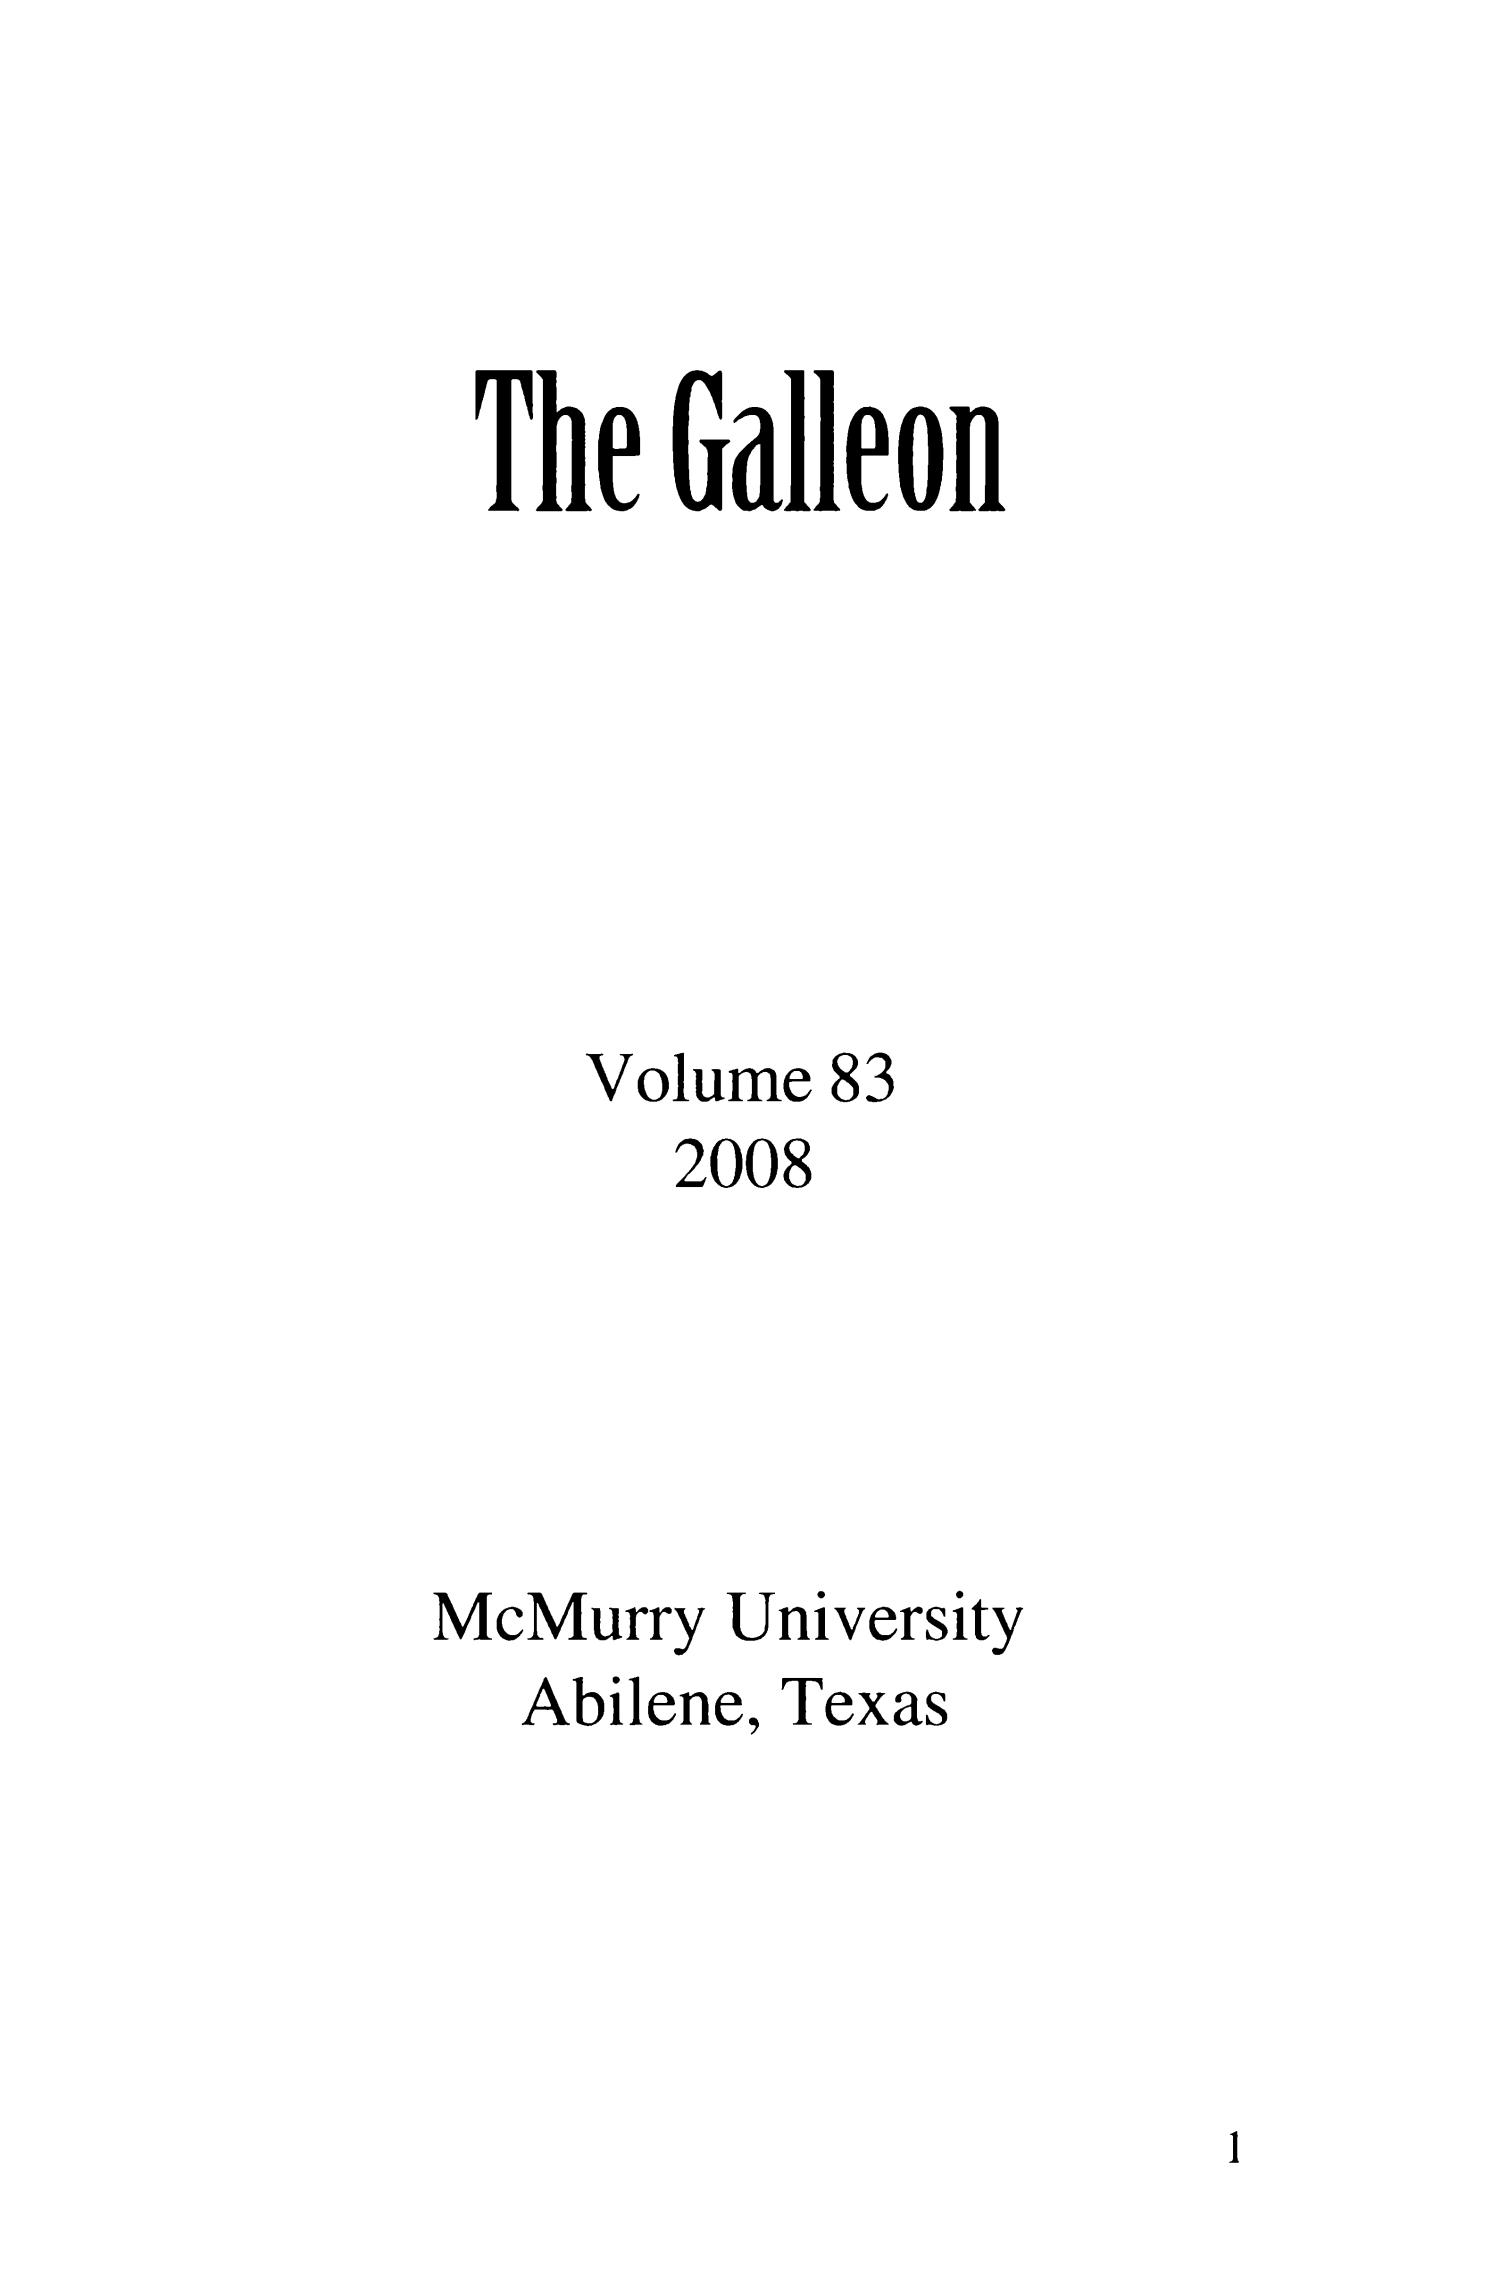 The Galleon, Volume 83, 2008
                                                
                                                    1
                                                